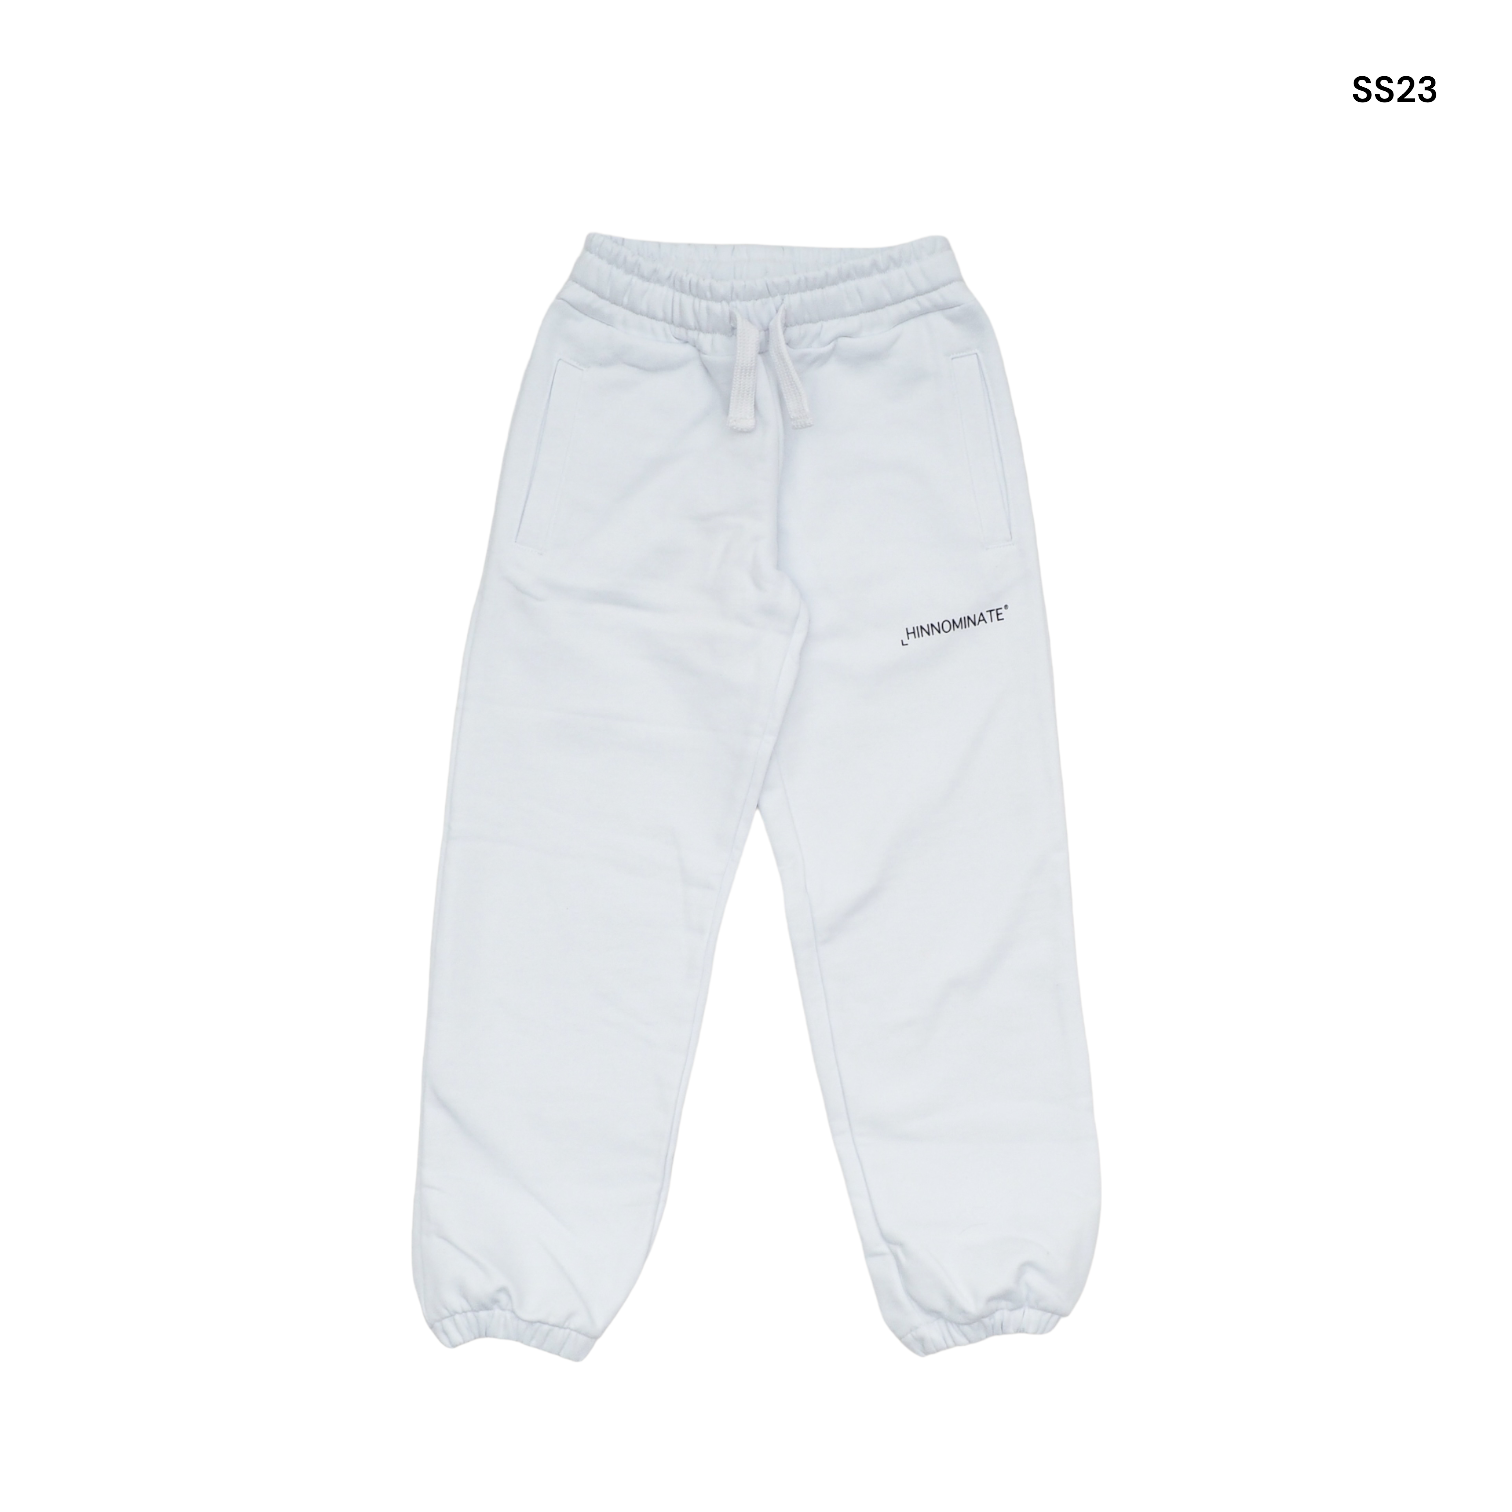 Pantalone in felpa bianco con logo per bambini